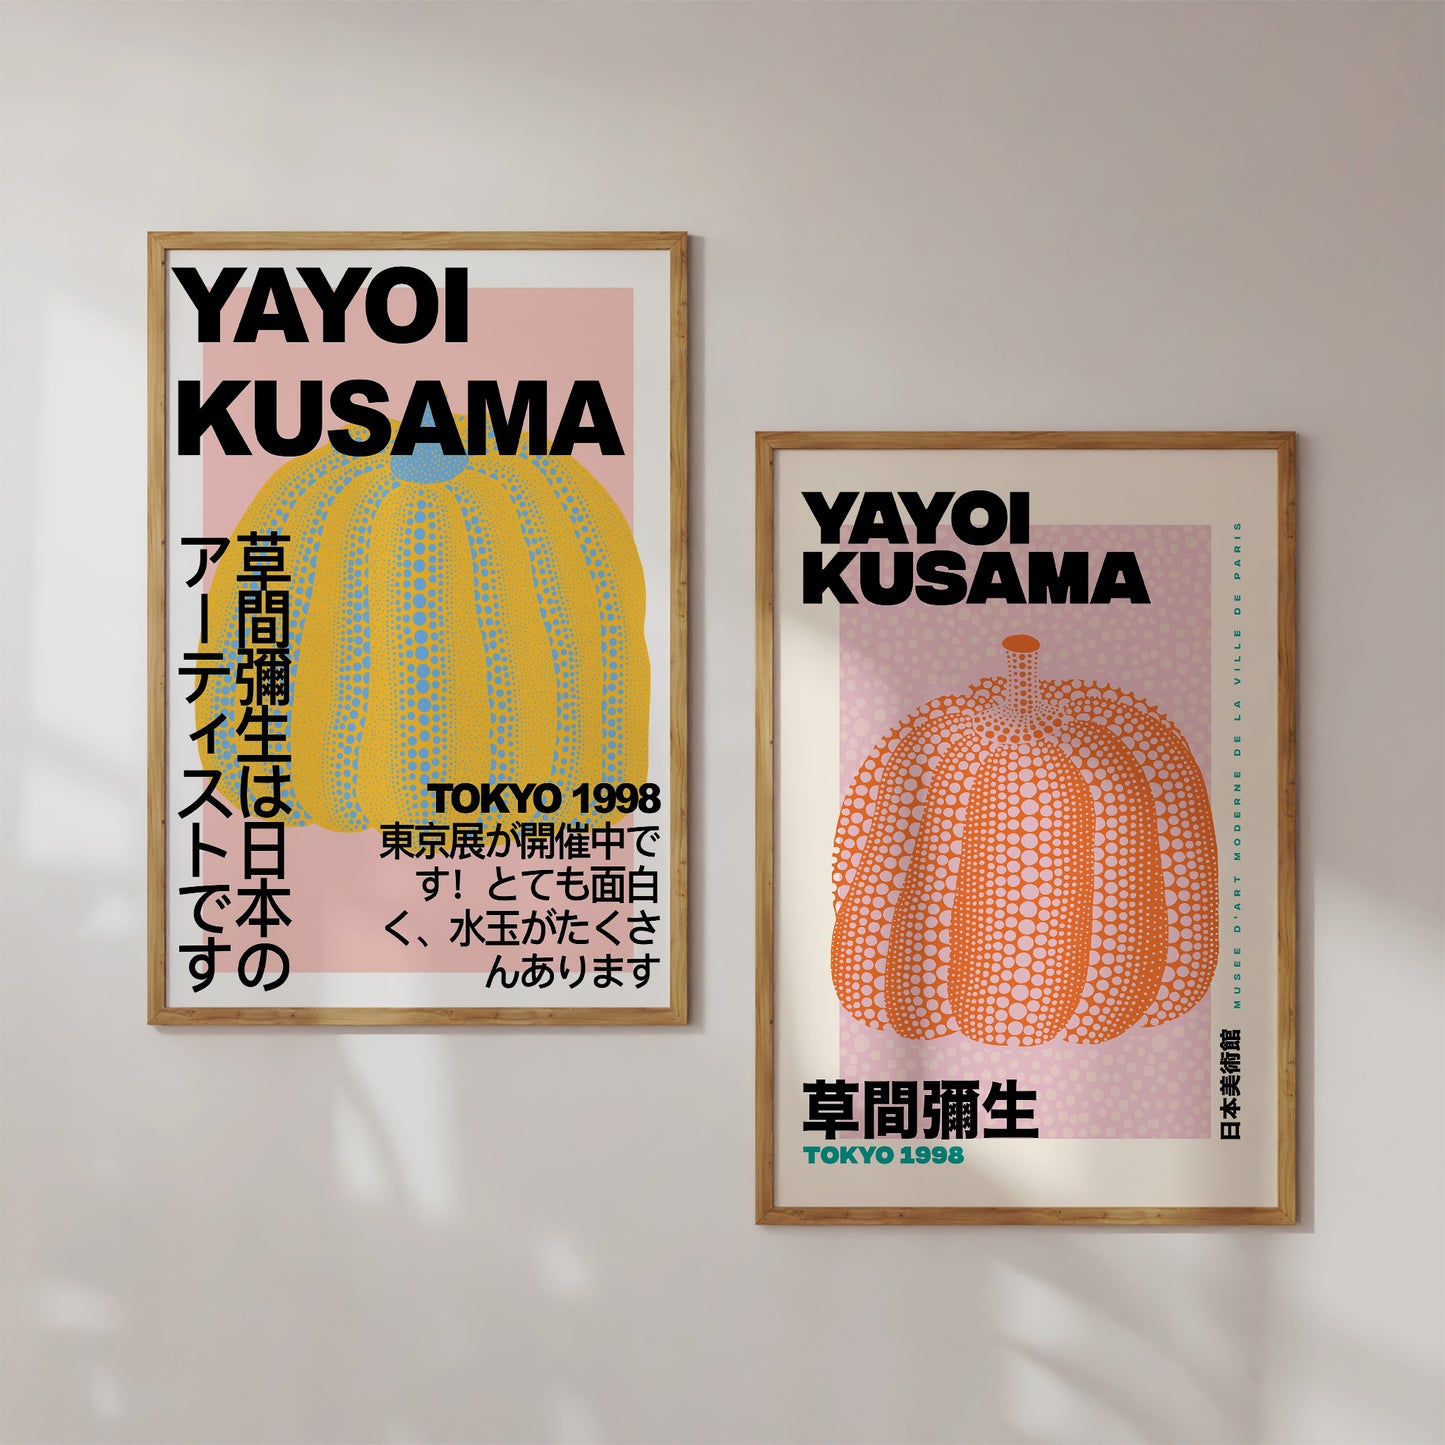 Tokyo 1998 by Yayoi Kusama